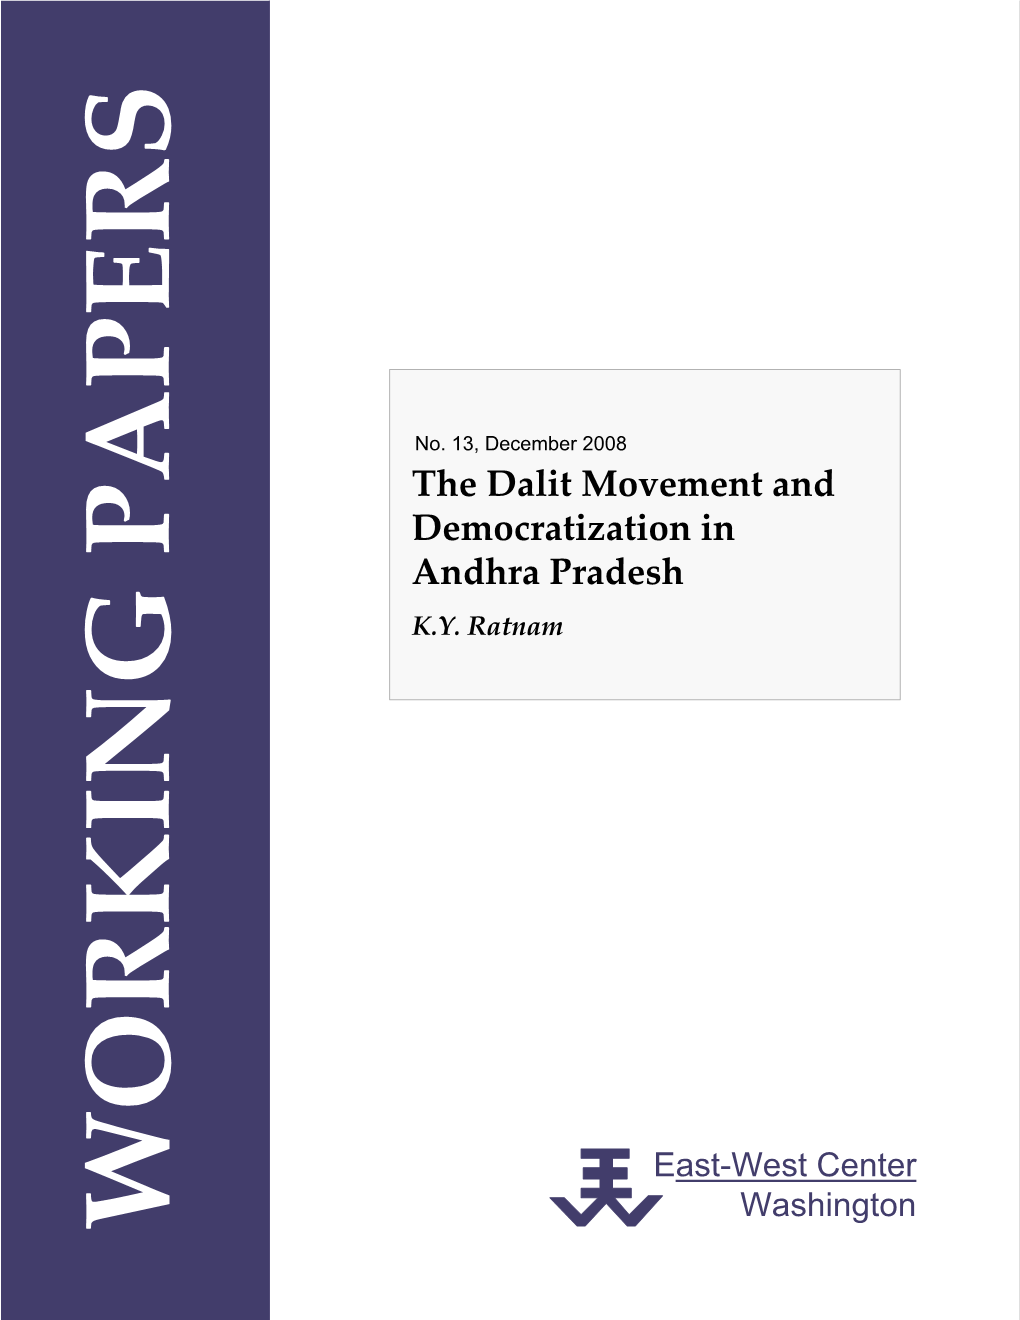 The Dalit Movement and Democratization in Andhra Pradesh